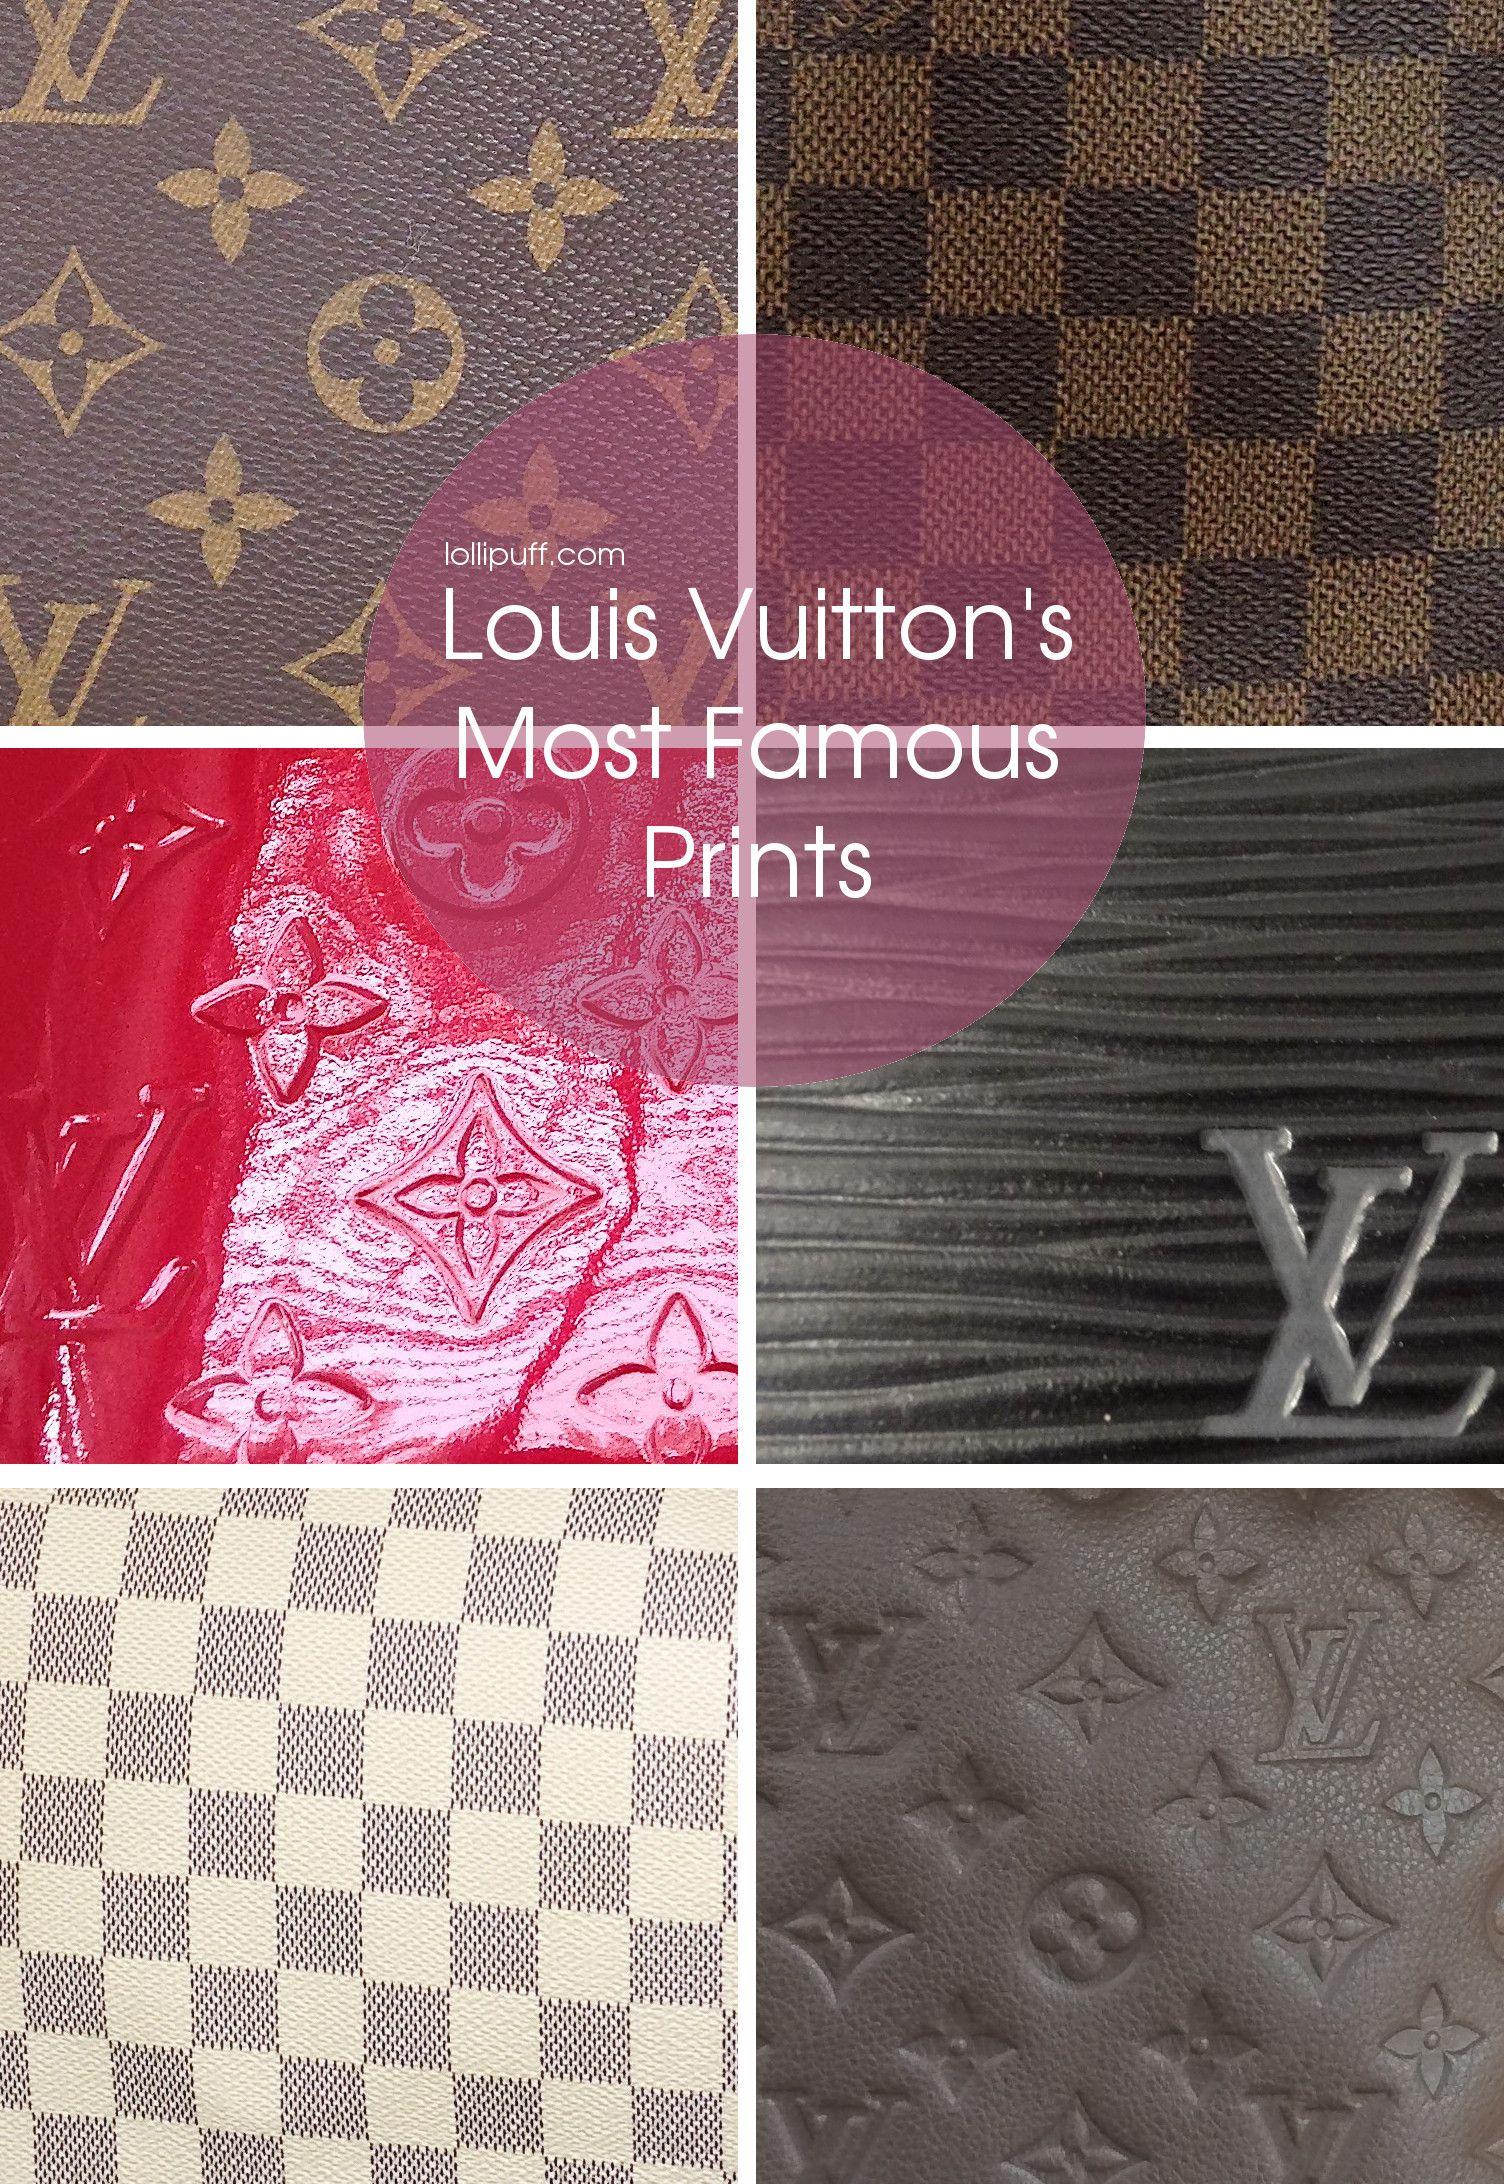 Purse LV Logo - Different Louis Vuitton Prints and Patterns | Lollipuff